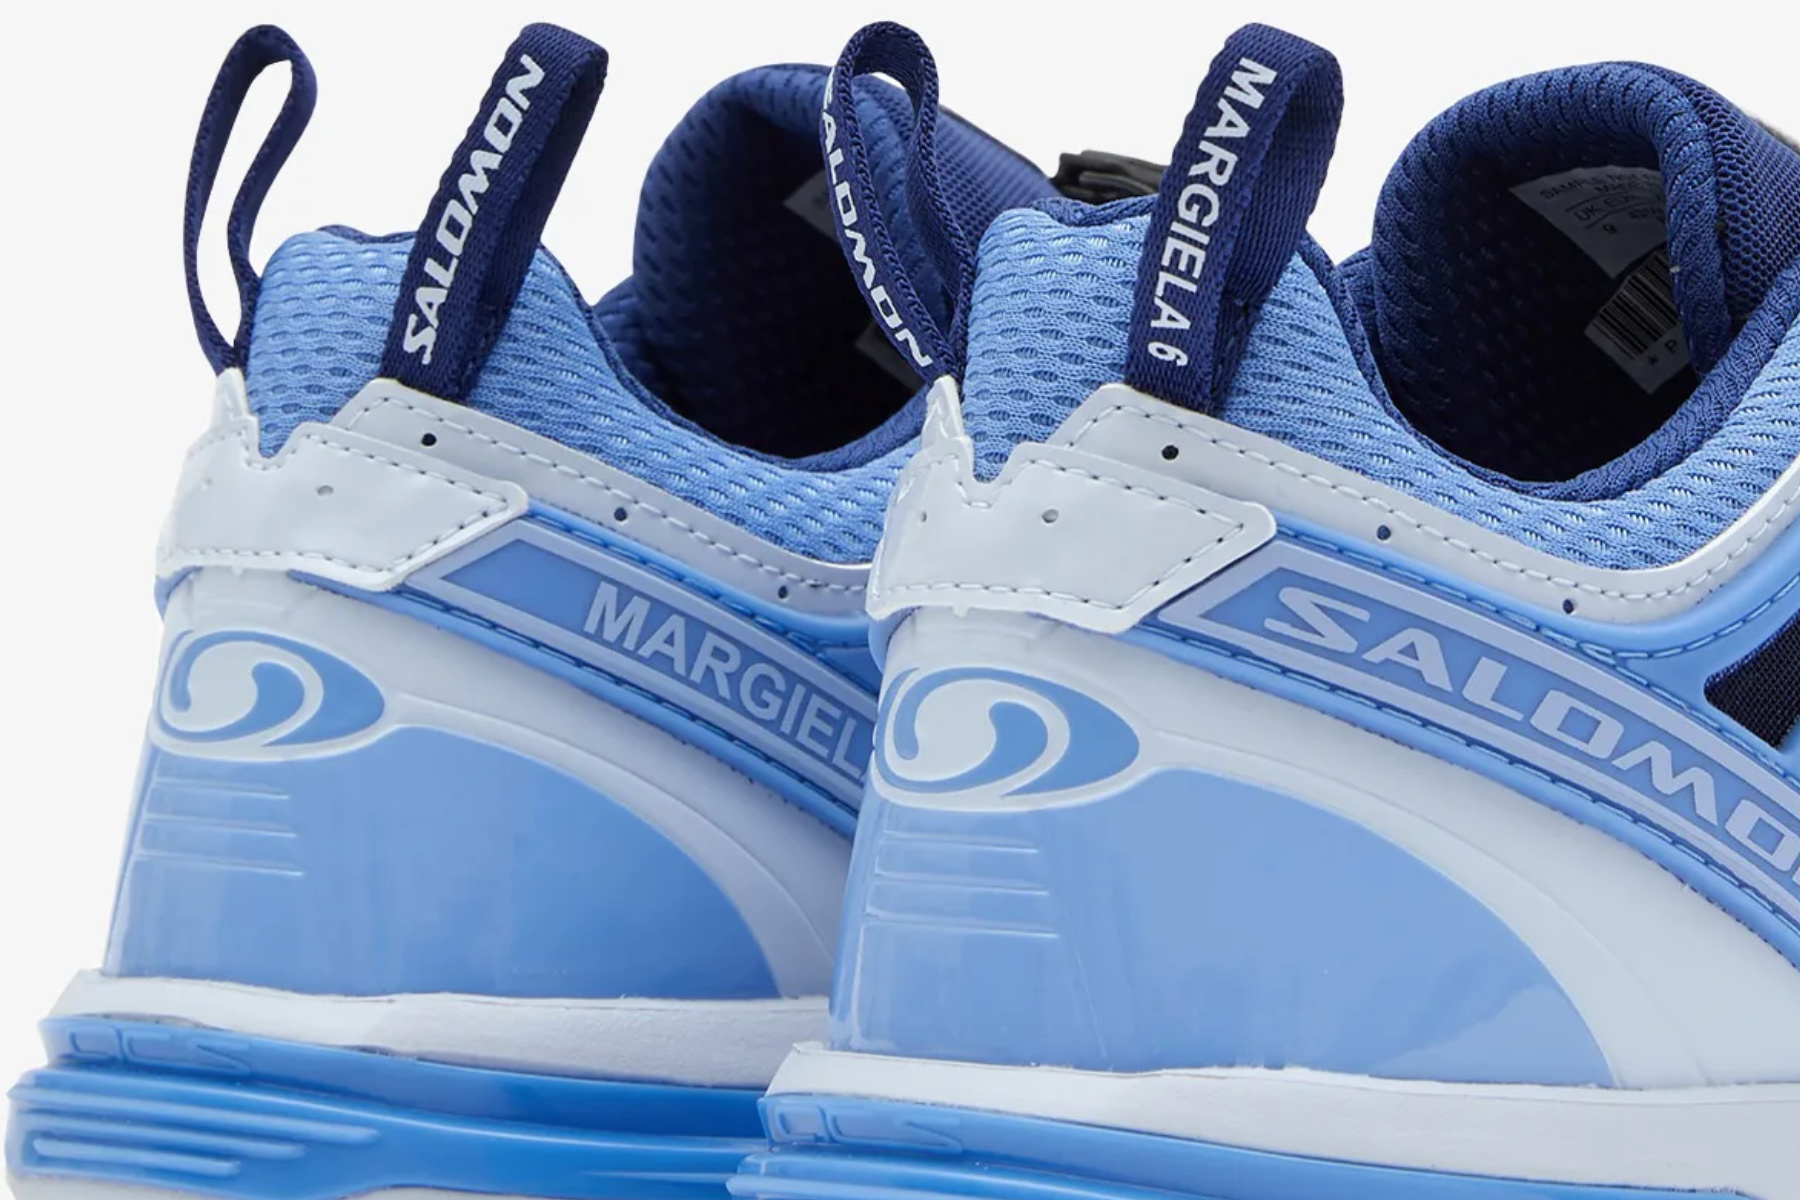 MM6 Maison Margiela & Salomon have dropped a collaborative ACS Pro sneaker.